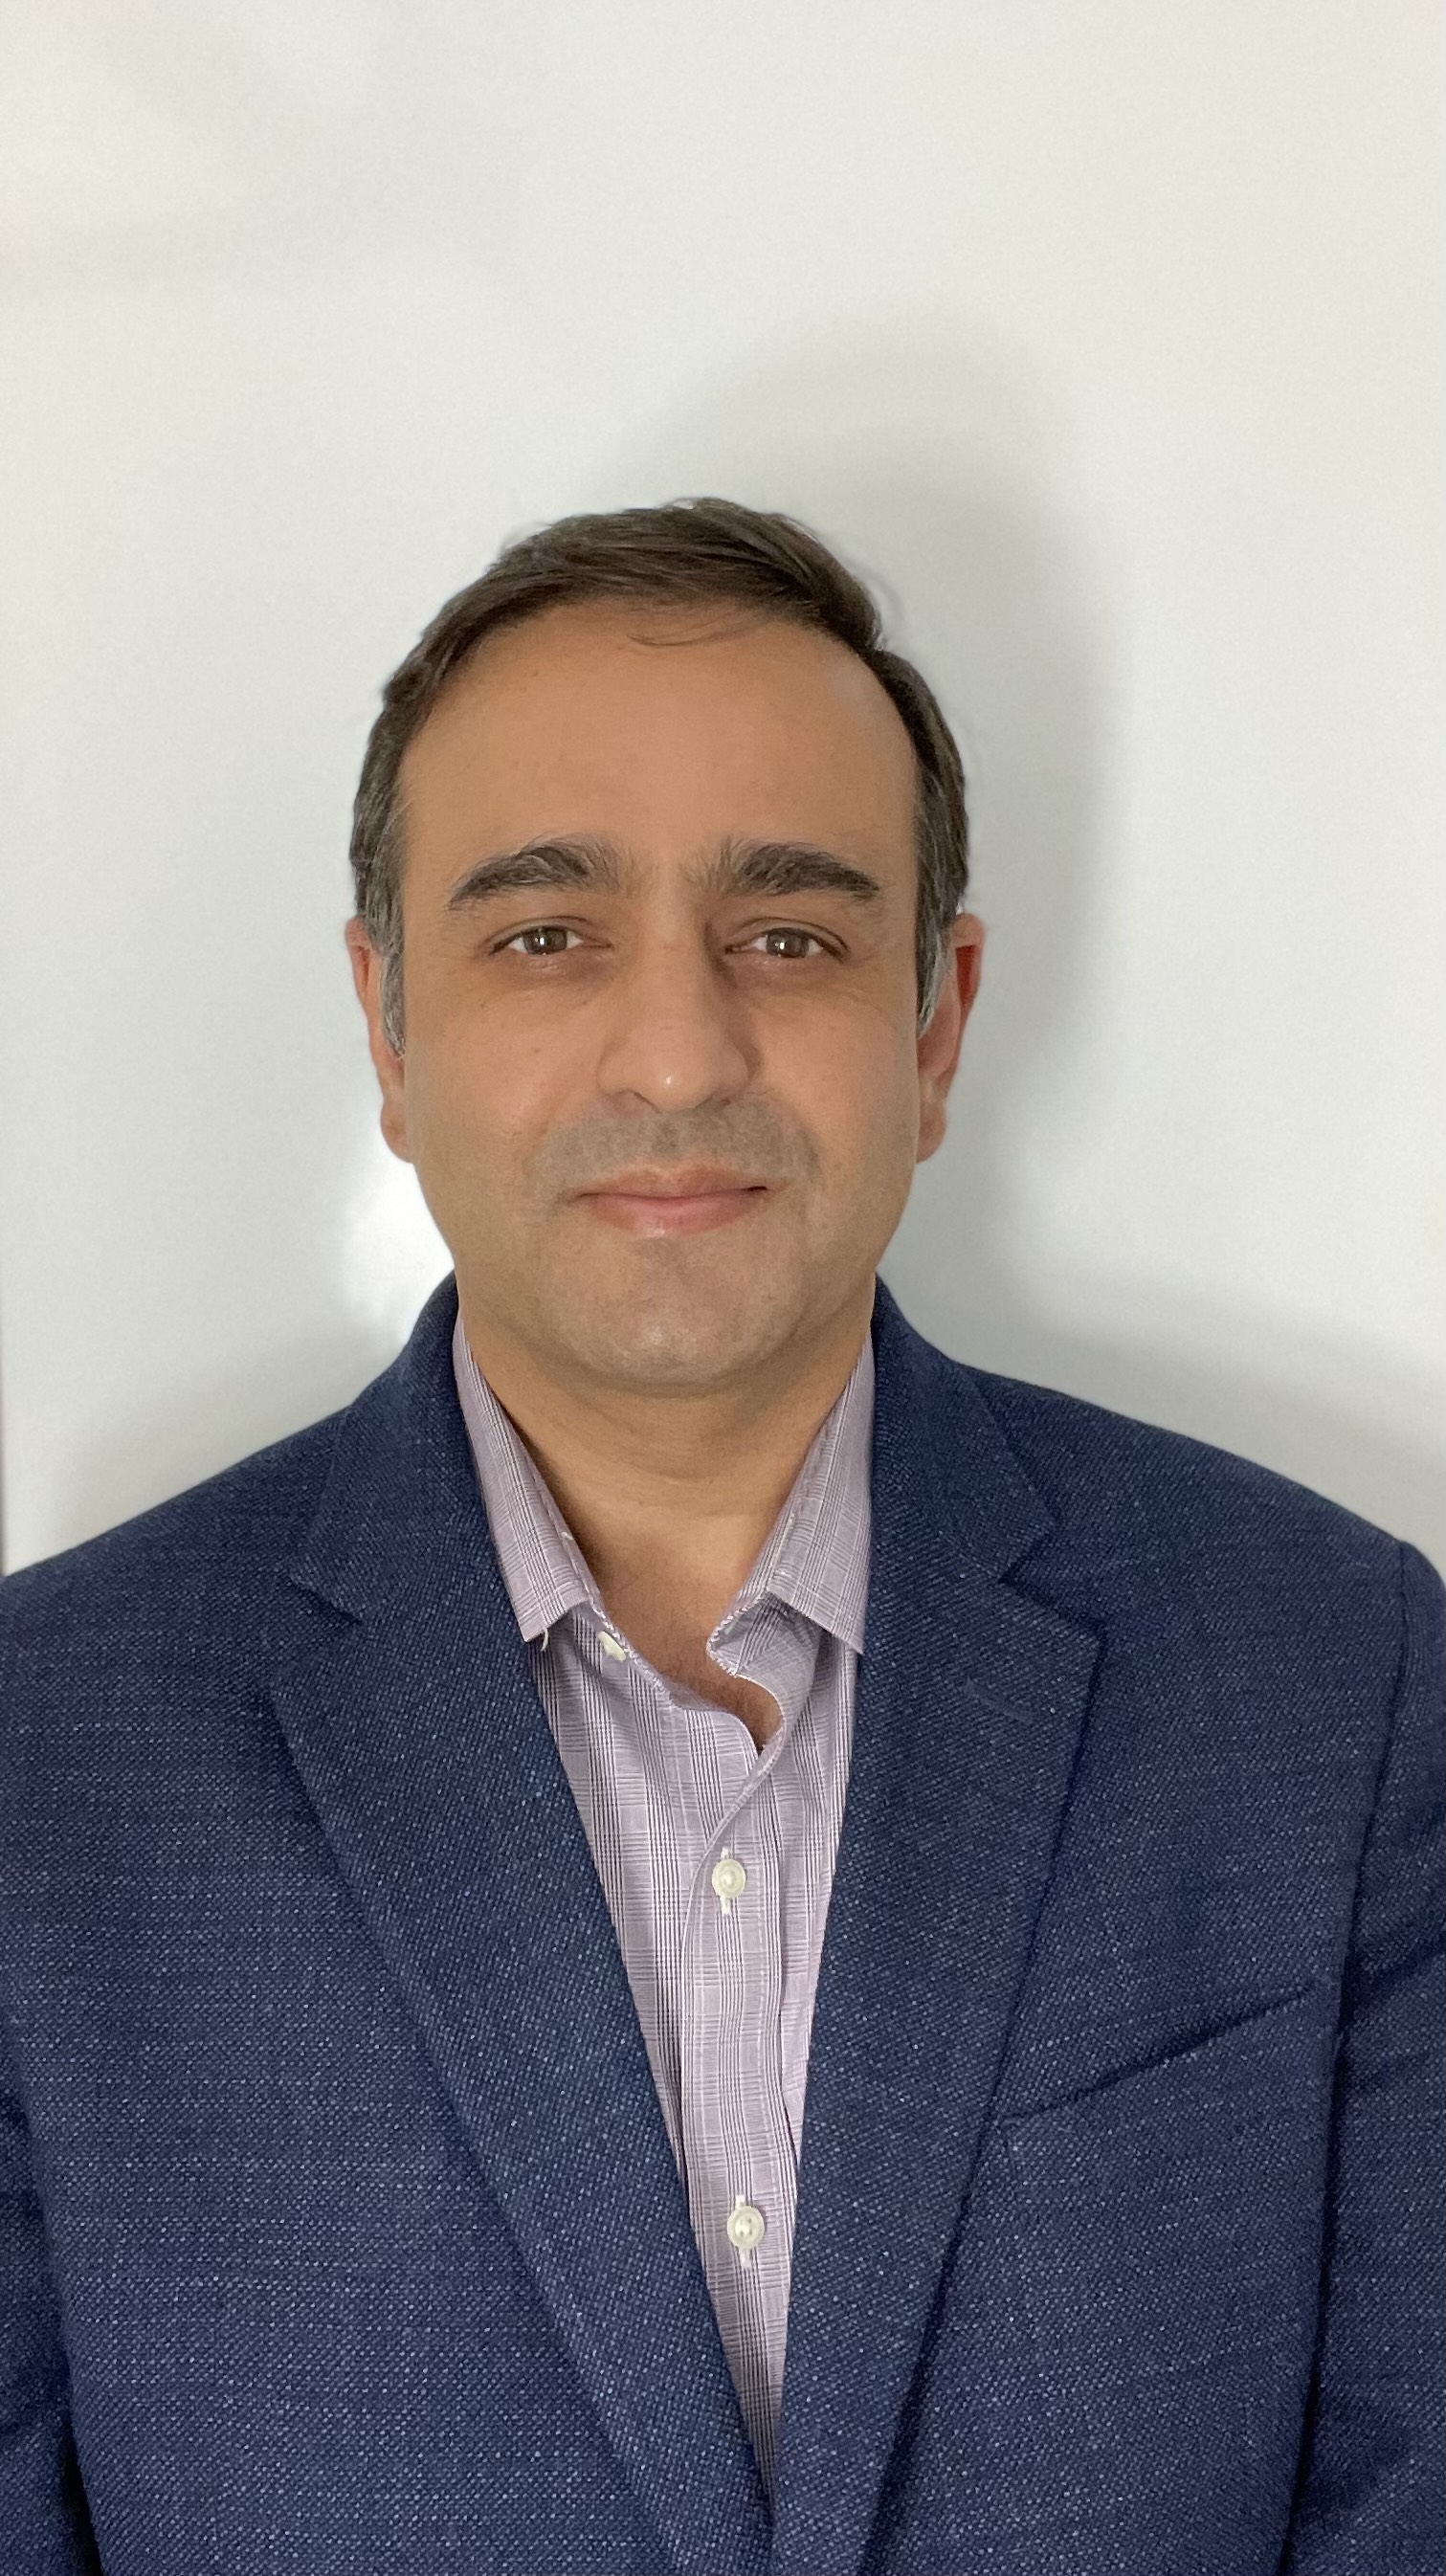 Sumit Misra, Business Head of Data Engineering Practice